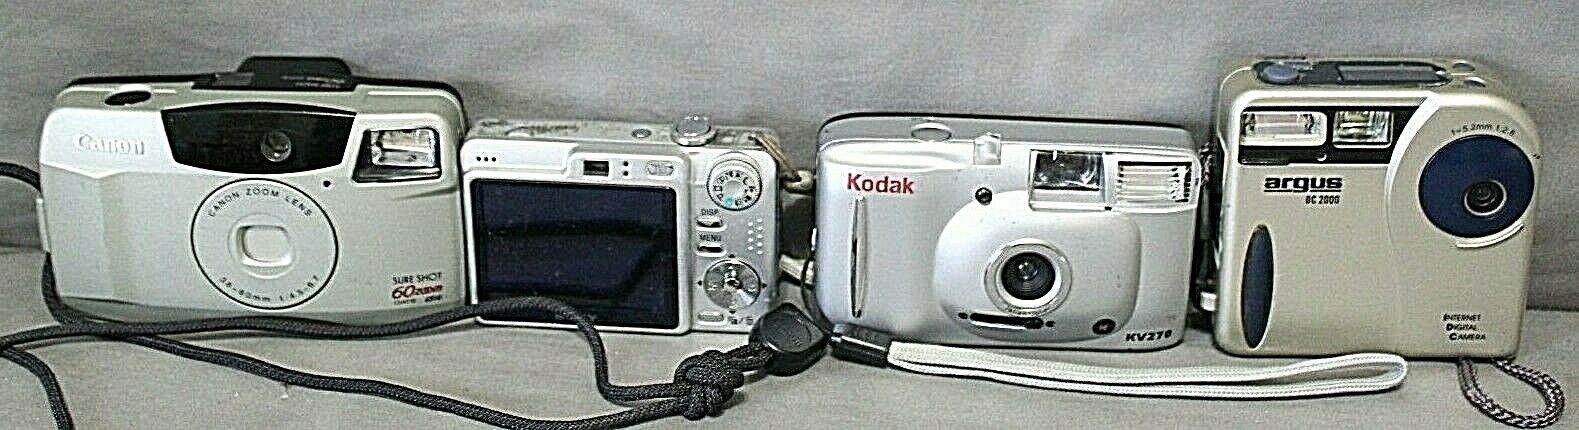 CAMERAS lot of 4 Sony Cyber-shot - Kodak KV270 - Argus DC 2000 - Canon Sure Shot Canon, Sony, Argus & Kodak does not apply